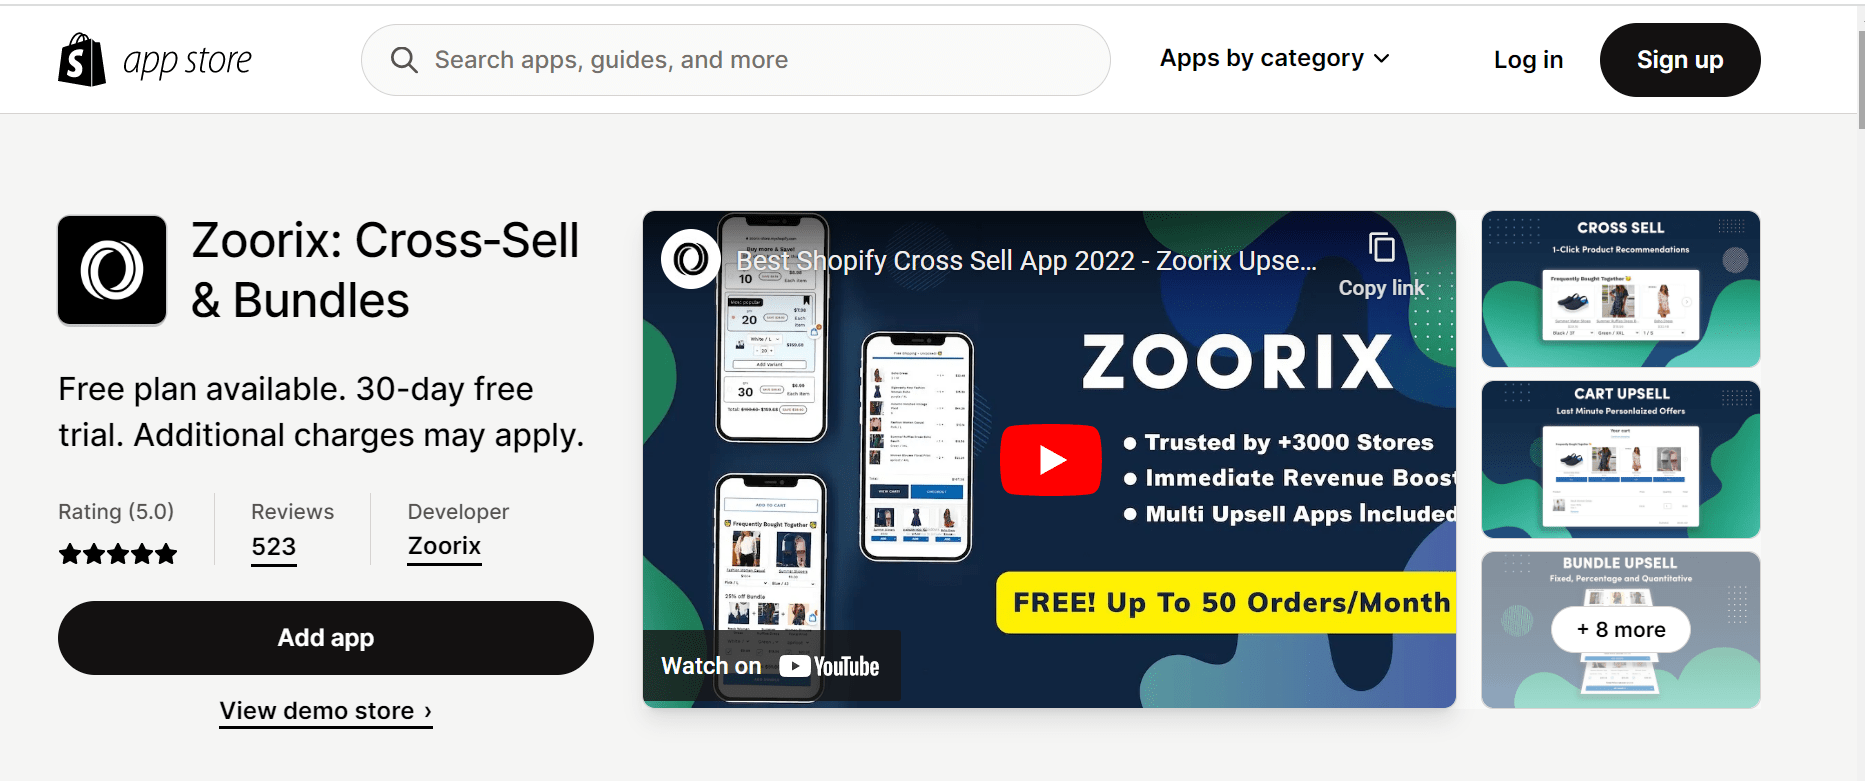 Zoorix product recommendation app